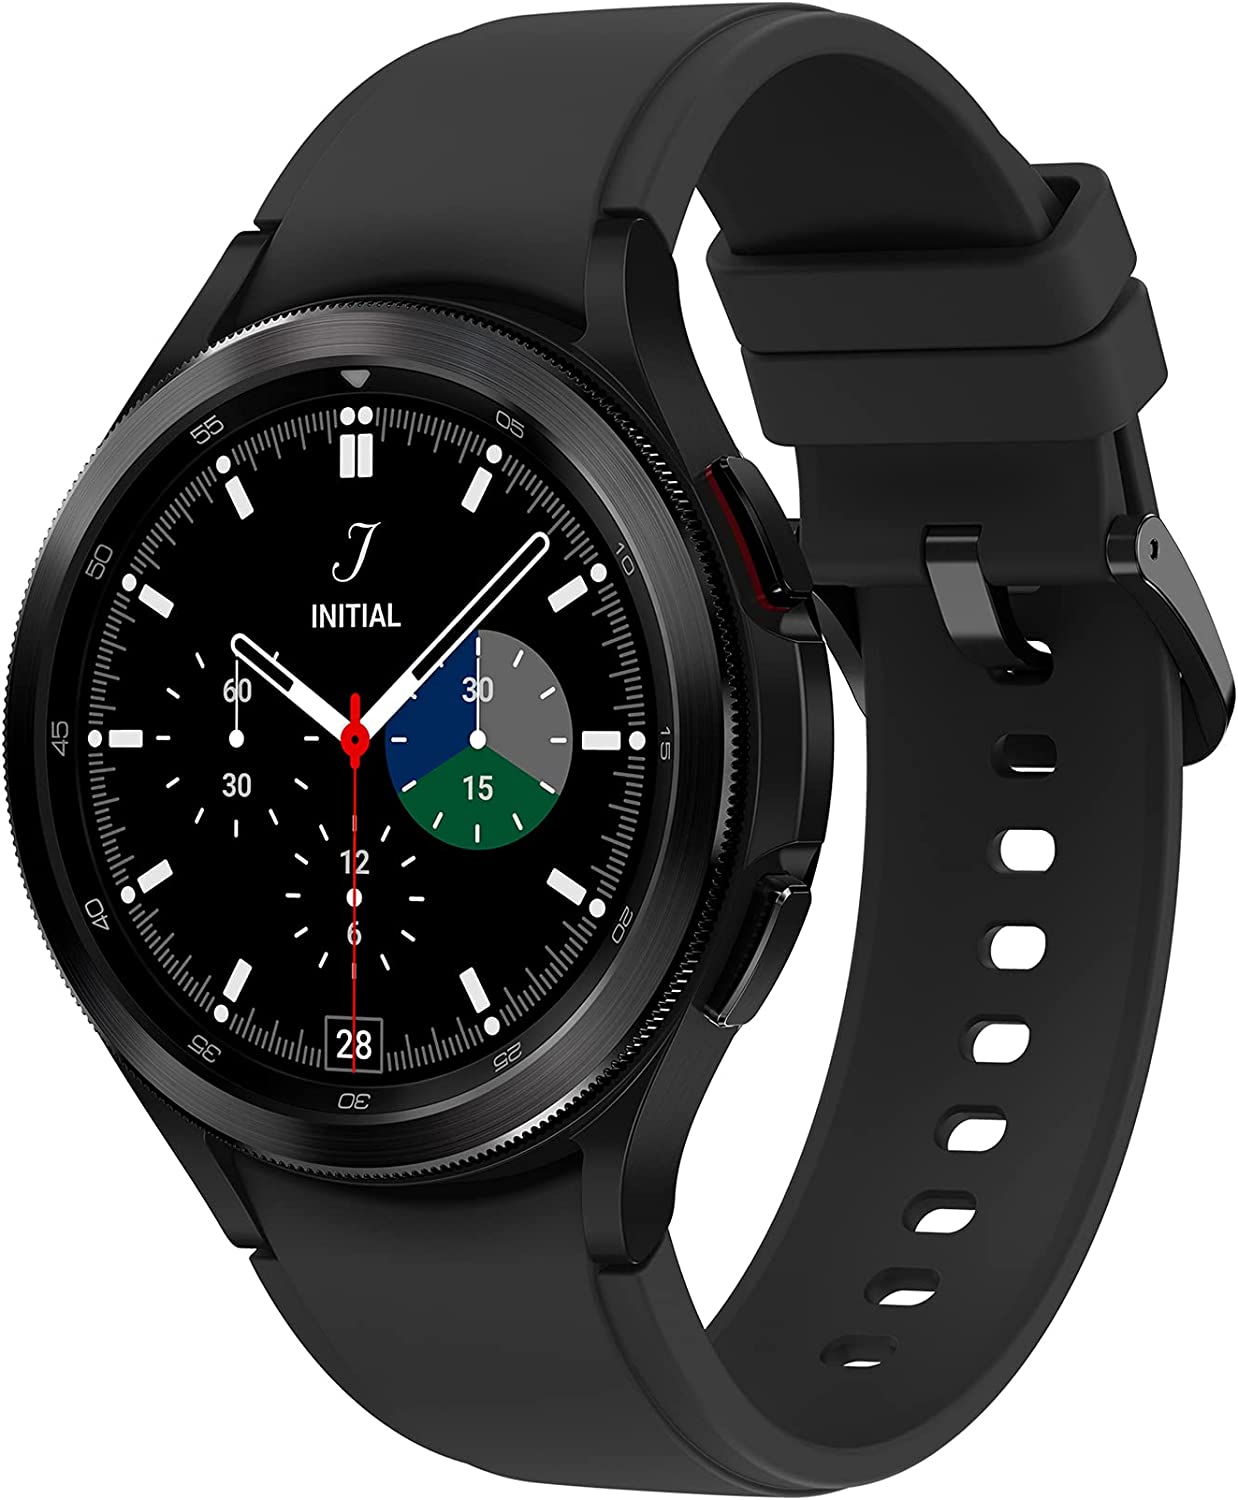 Samsung's smartwatch is on sale.